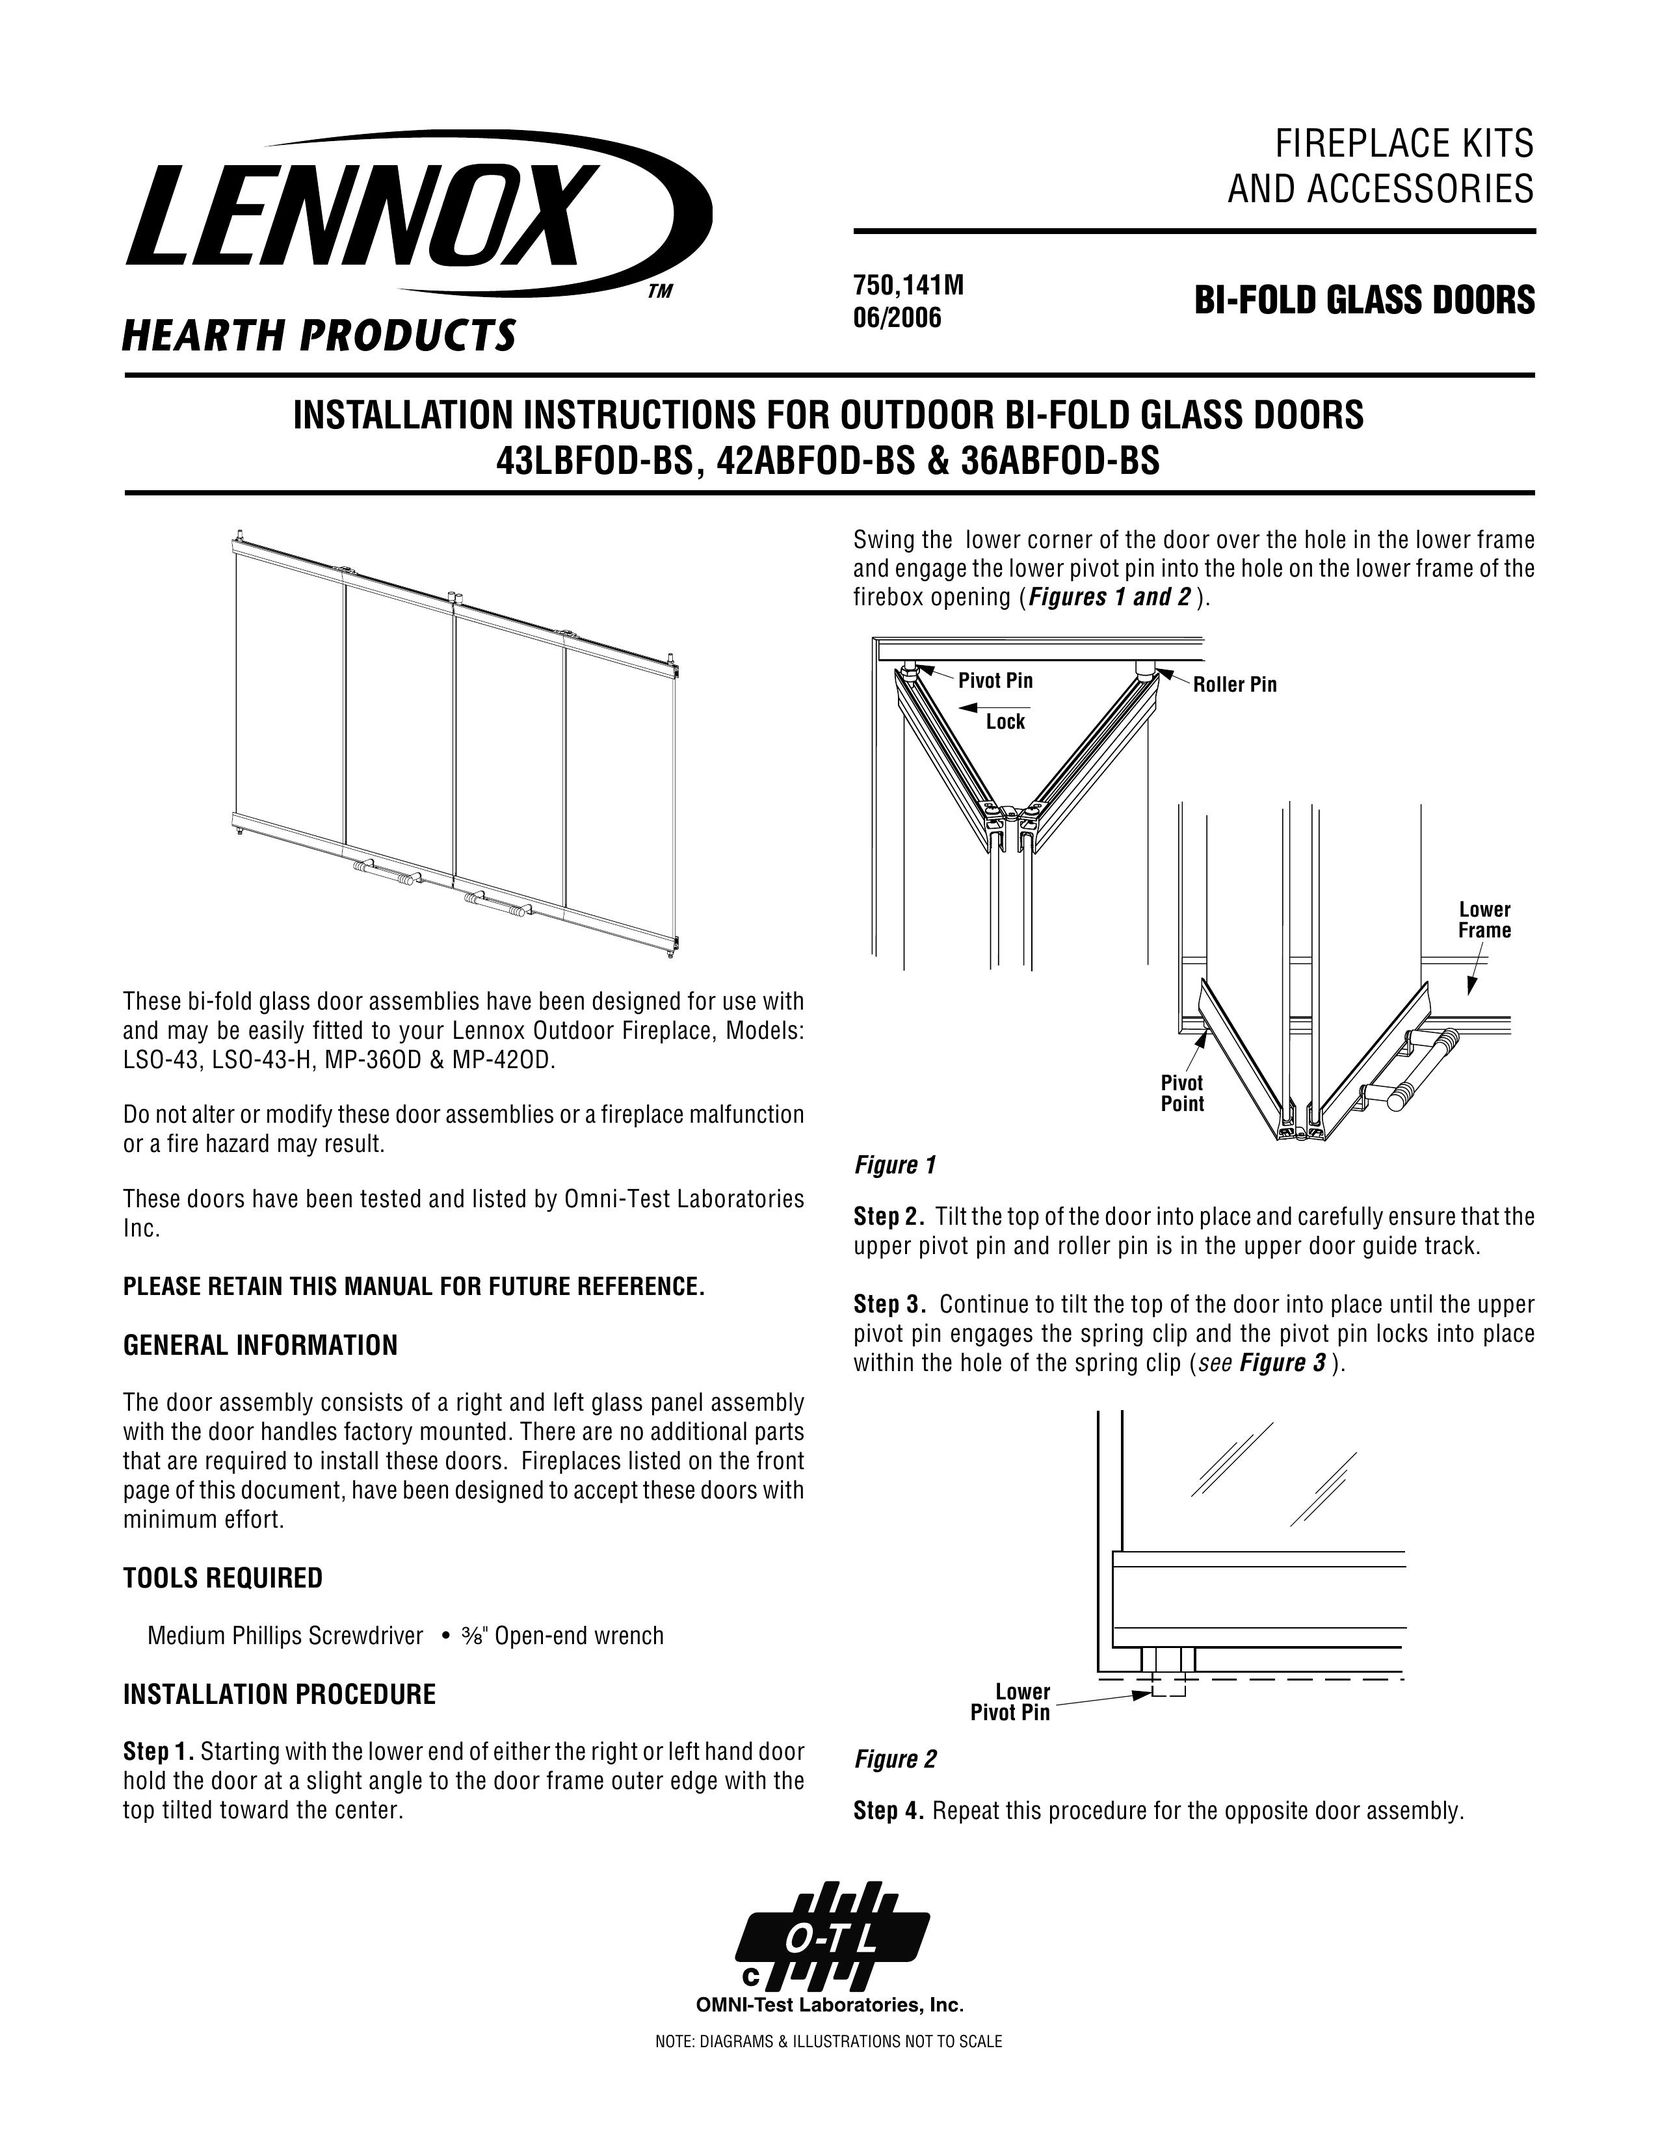 Lennox Hearth LSO-43-H Door User Manual